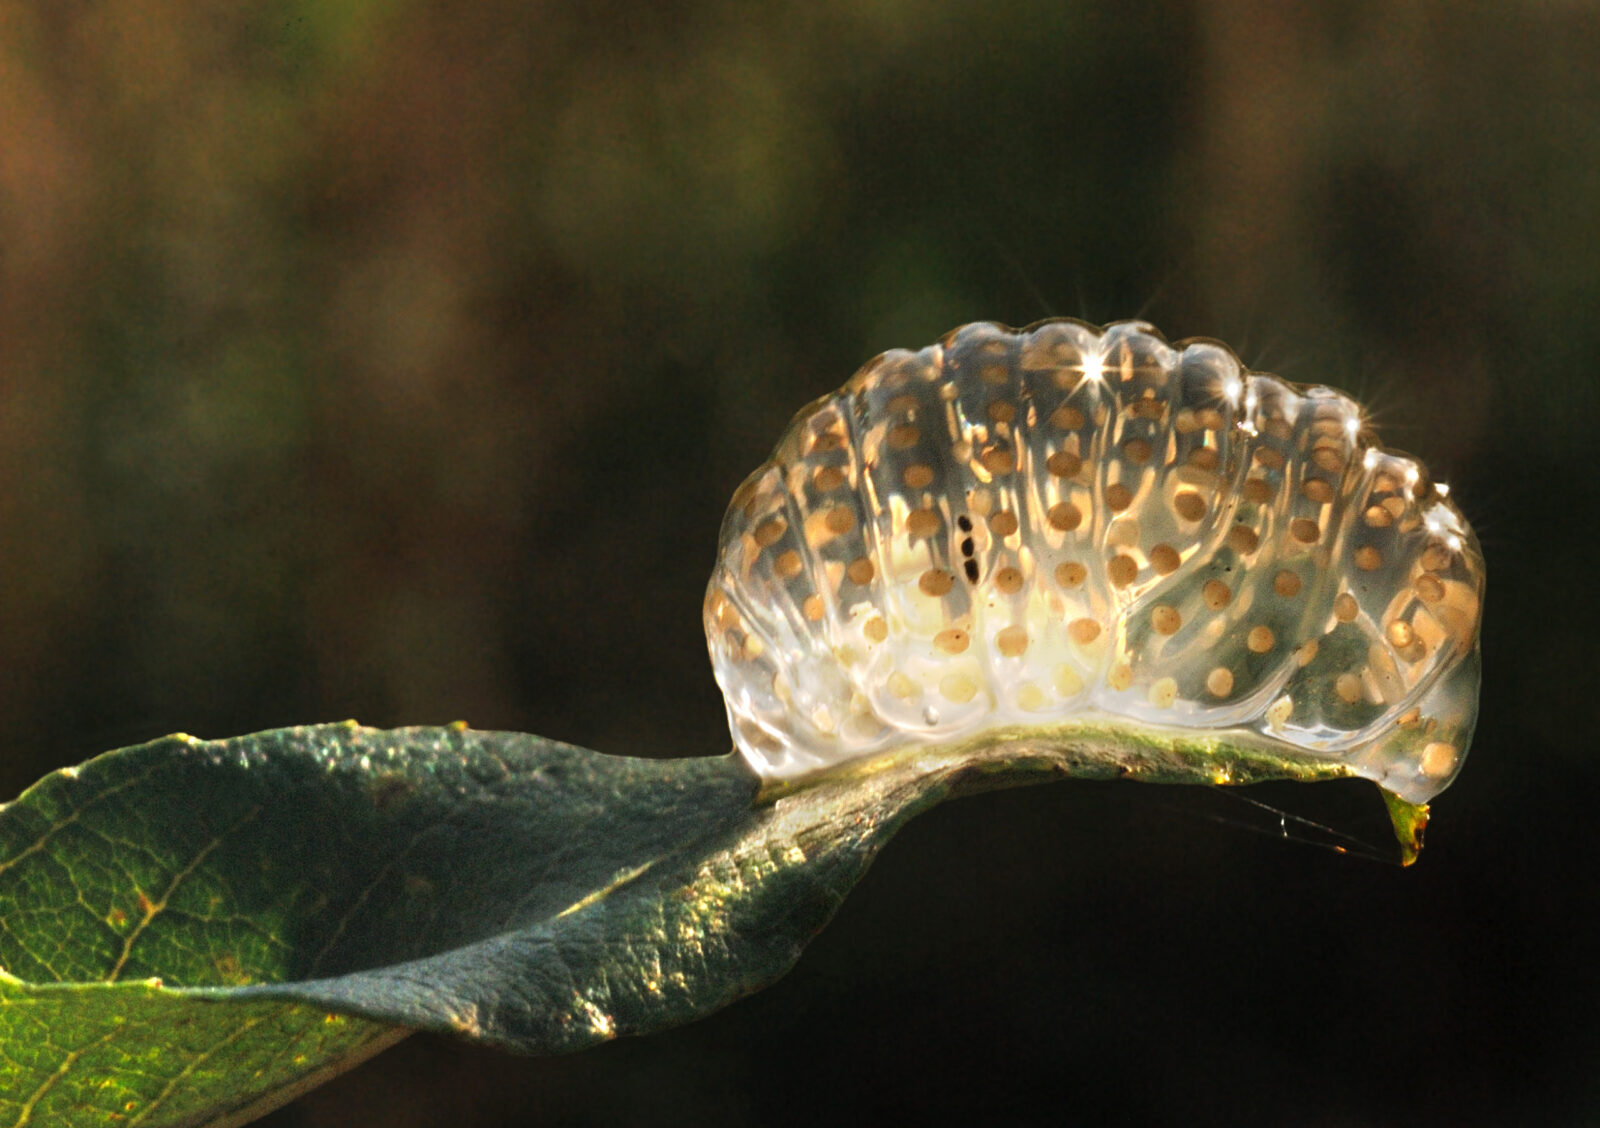 Caddis fly egg mass on leaf overhanging water, Credit Danny Beath